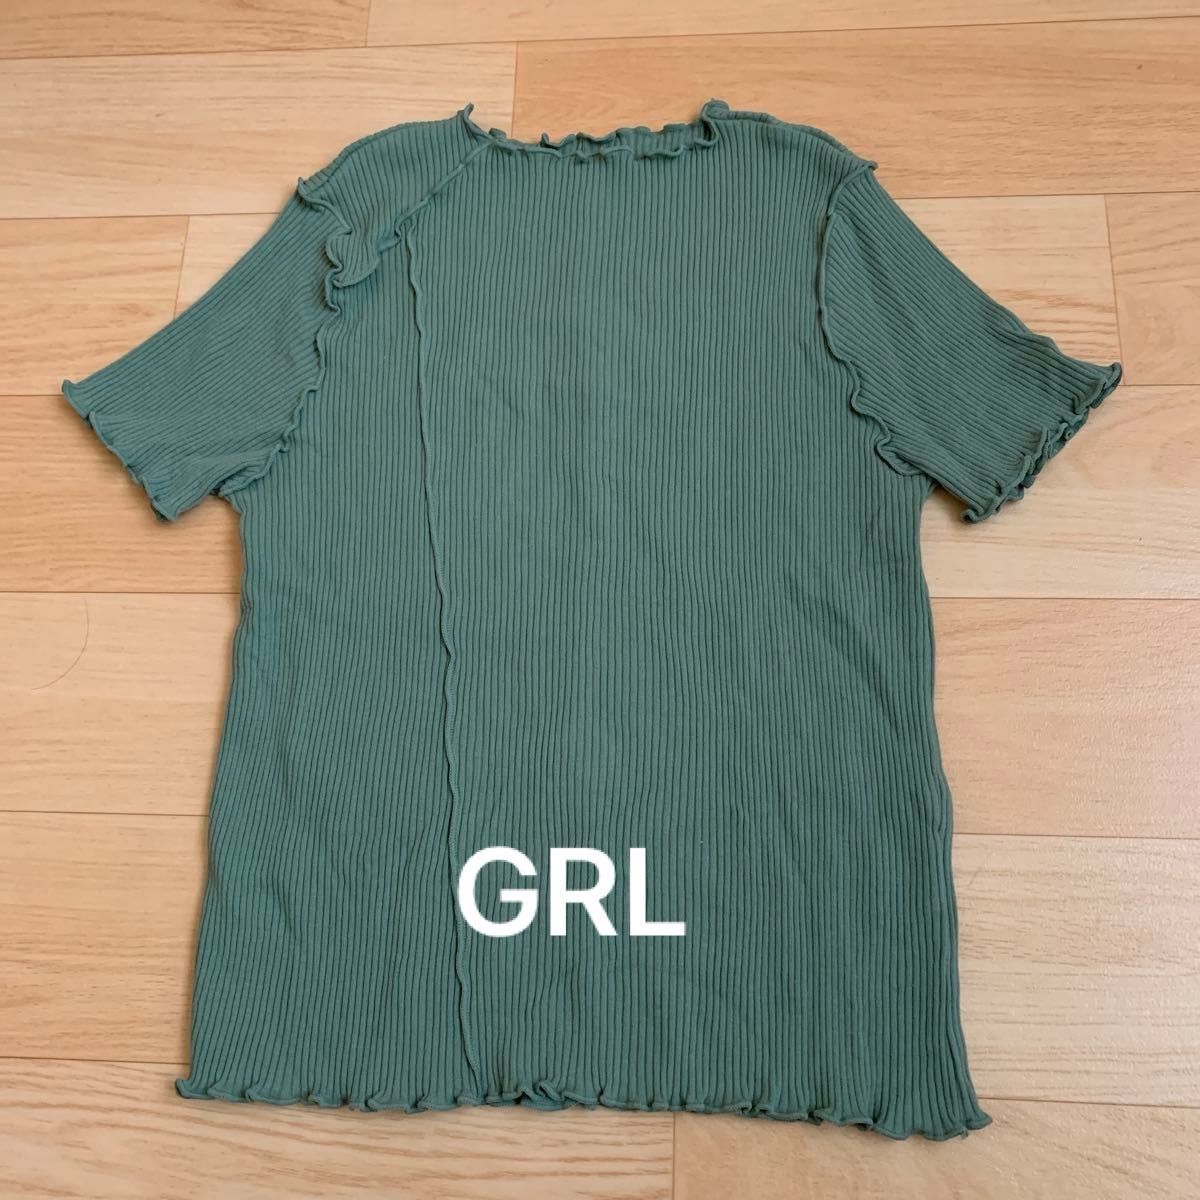 GRL トップス リブニット Tシャツ 半袖 カットソー 